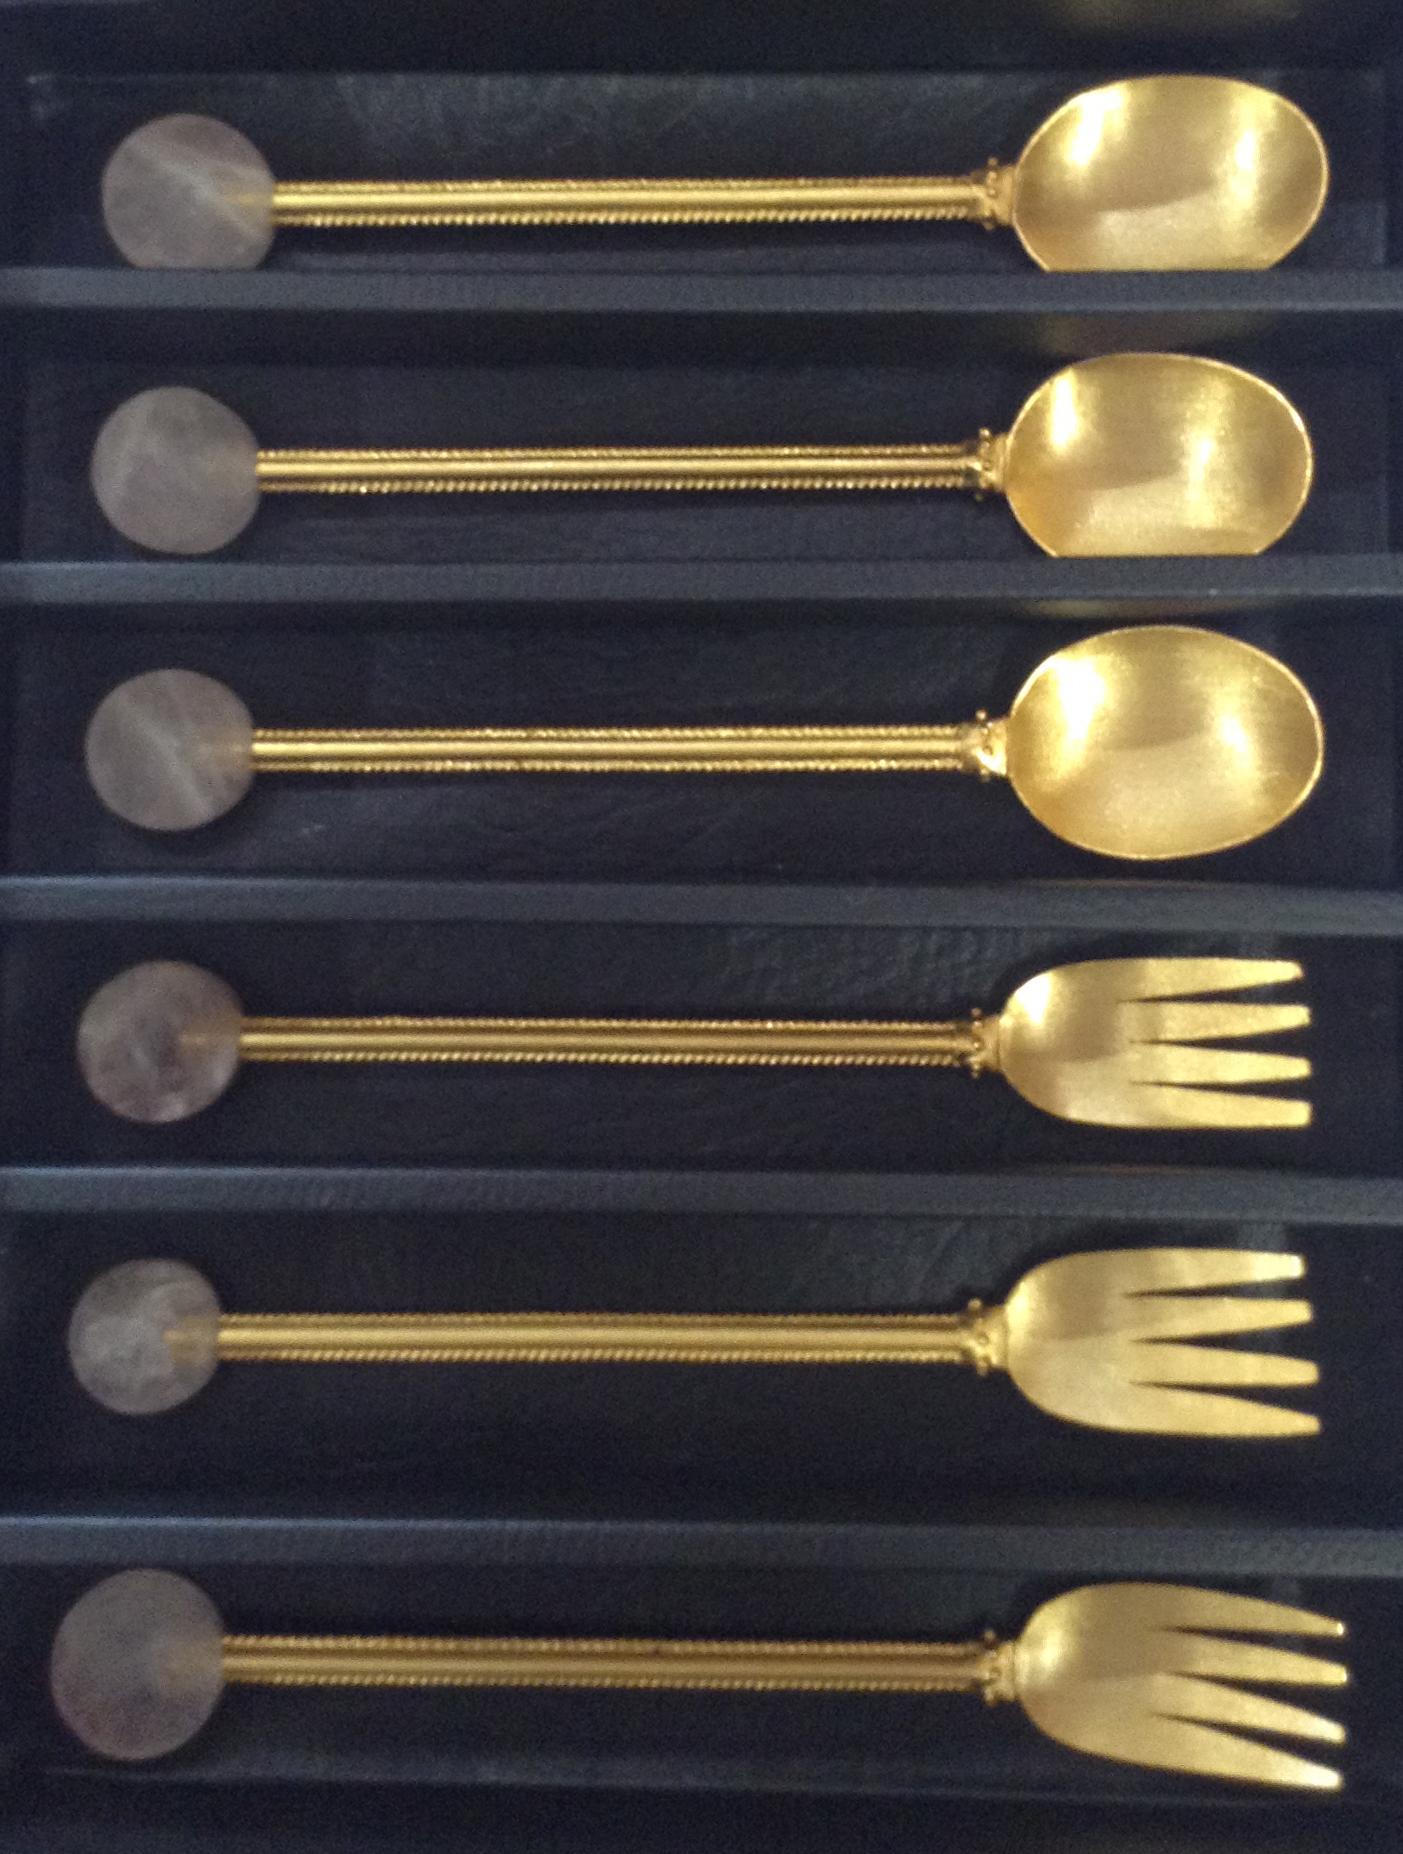 Italian Contemporary Gold Plated Spoon Server Set Onix Stone HandcraftedNatalia Criado